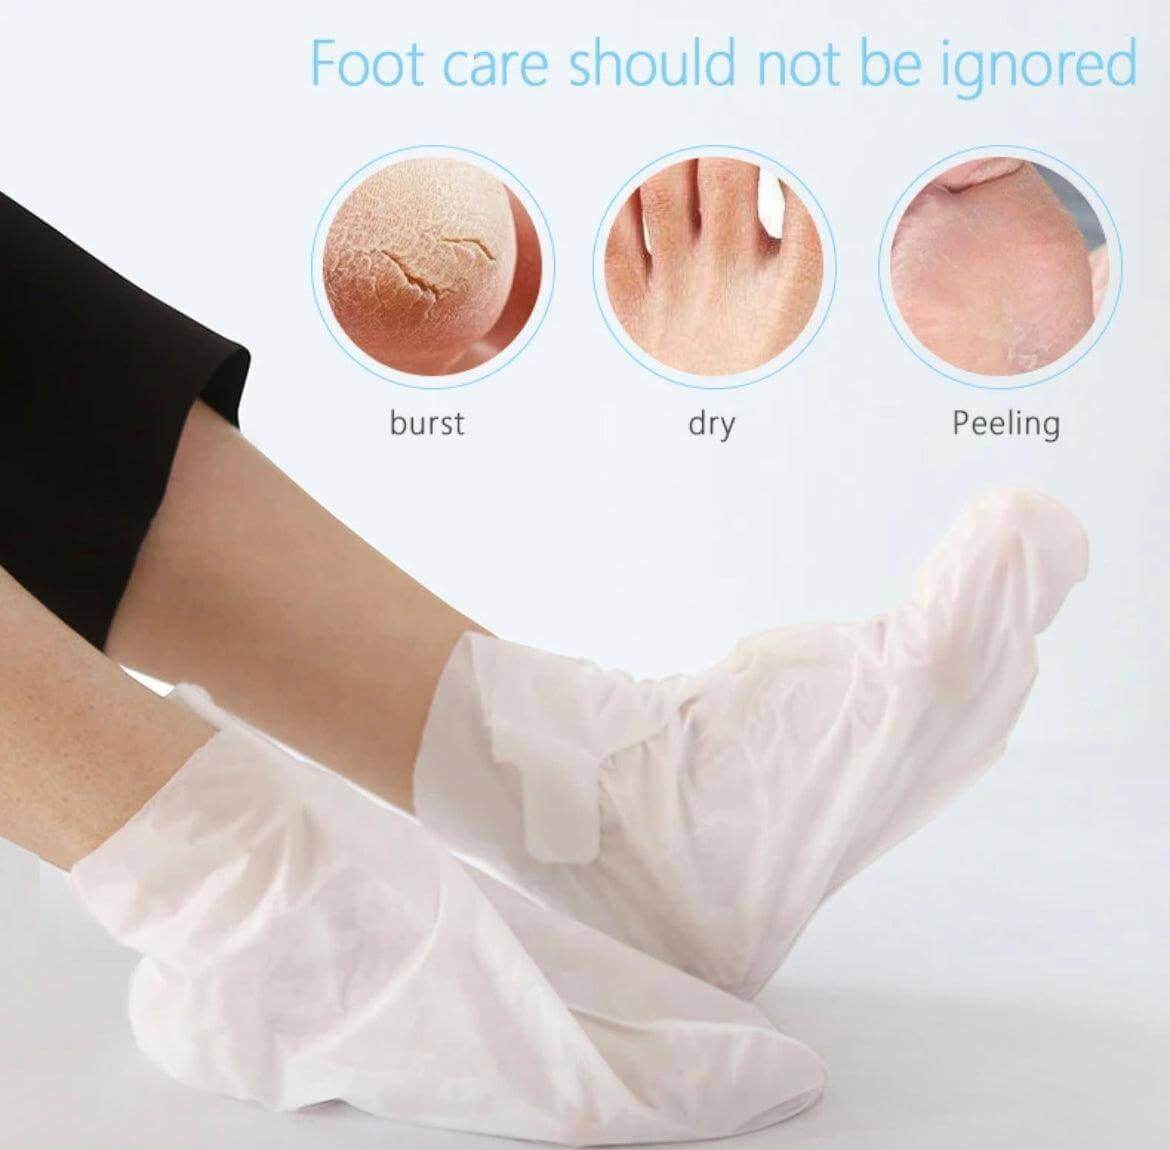 Leewa Beauty Moisturizing Foot Masks (2) - Leewa Beauty foot care should not be ignored